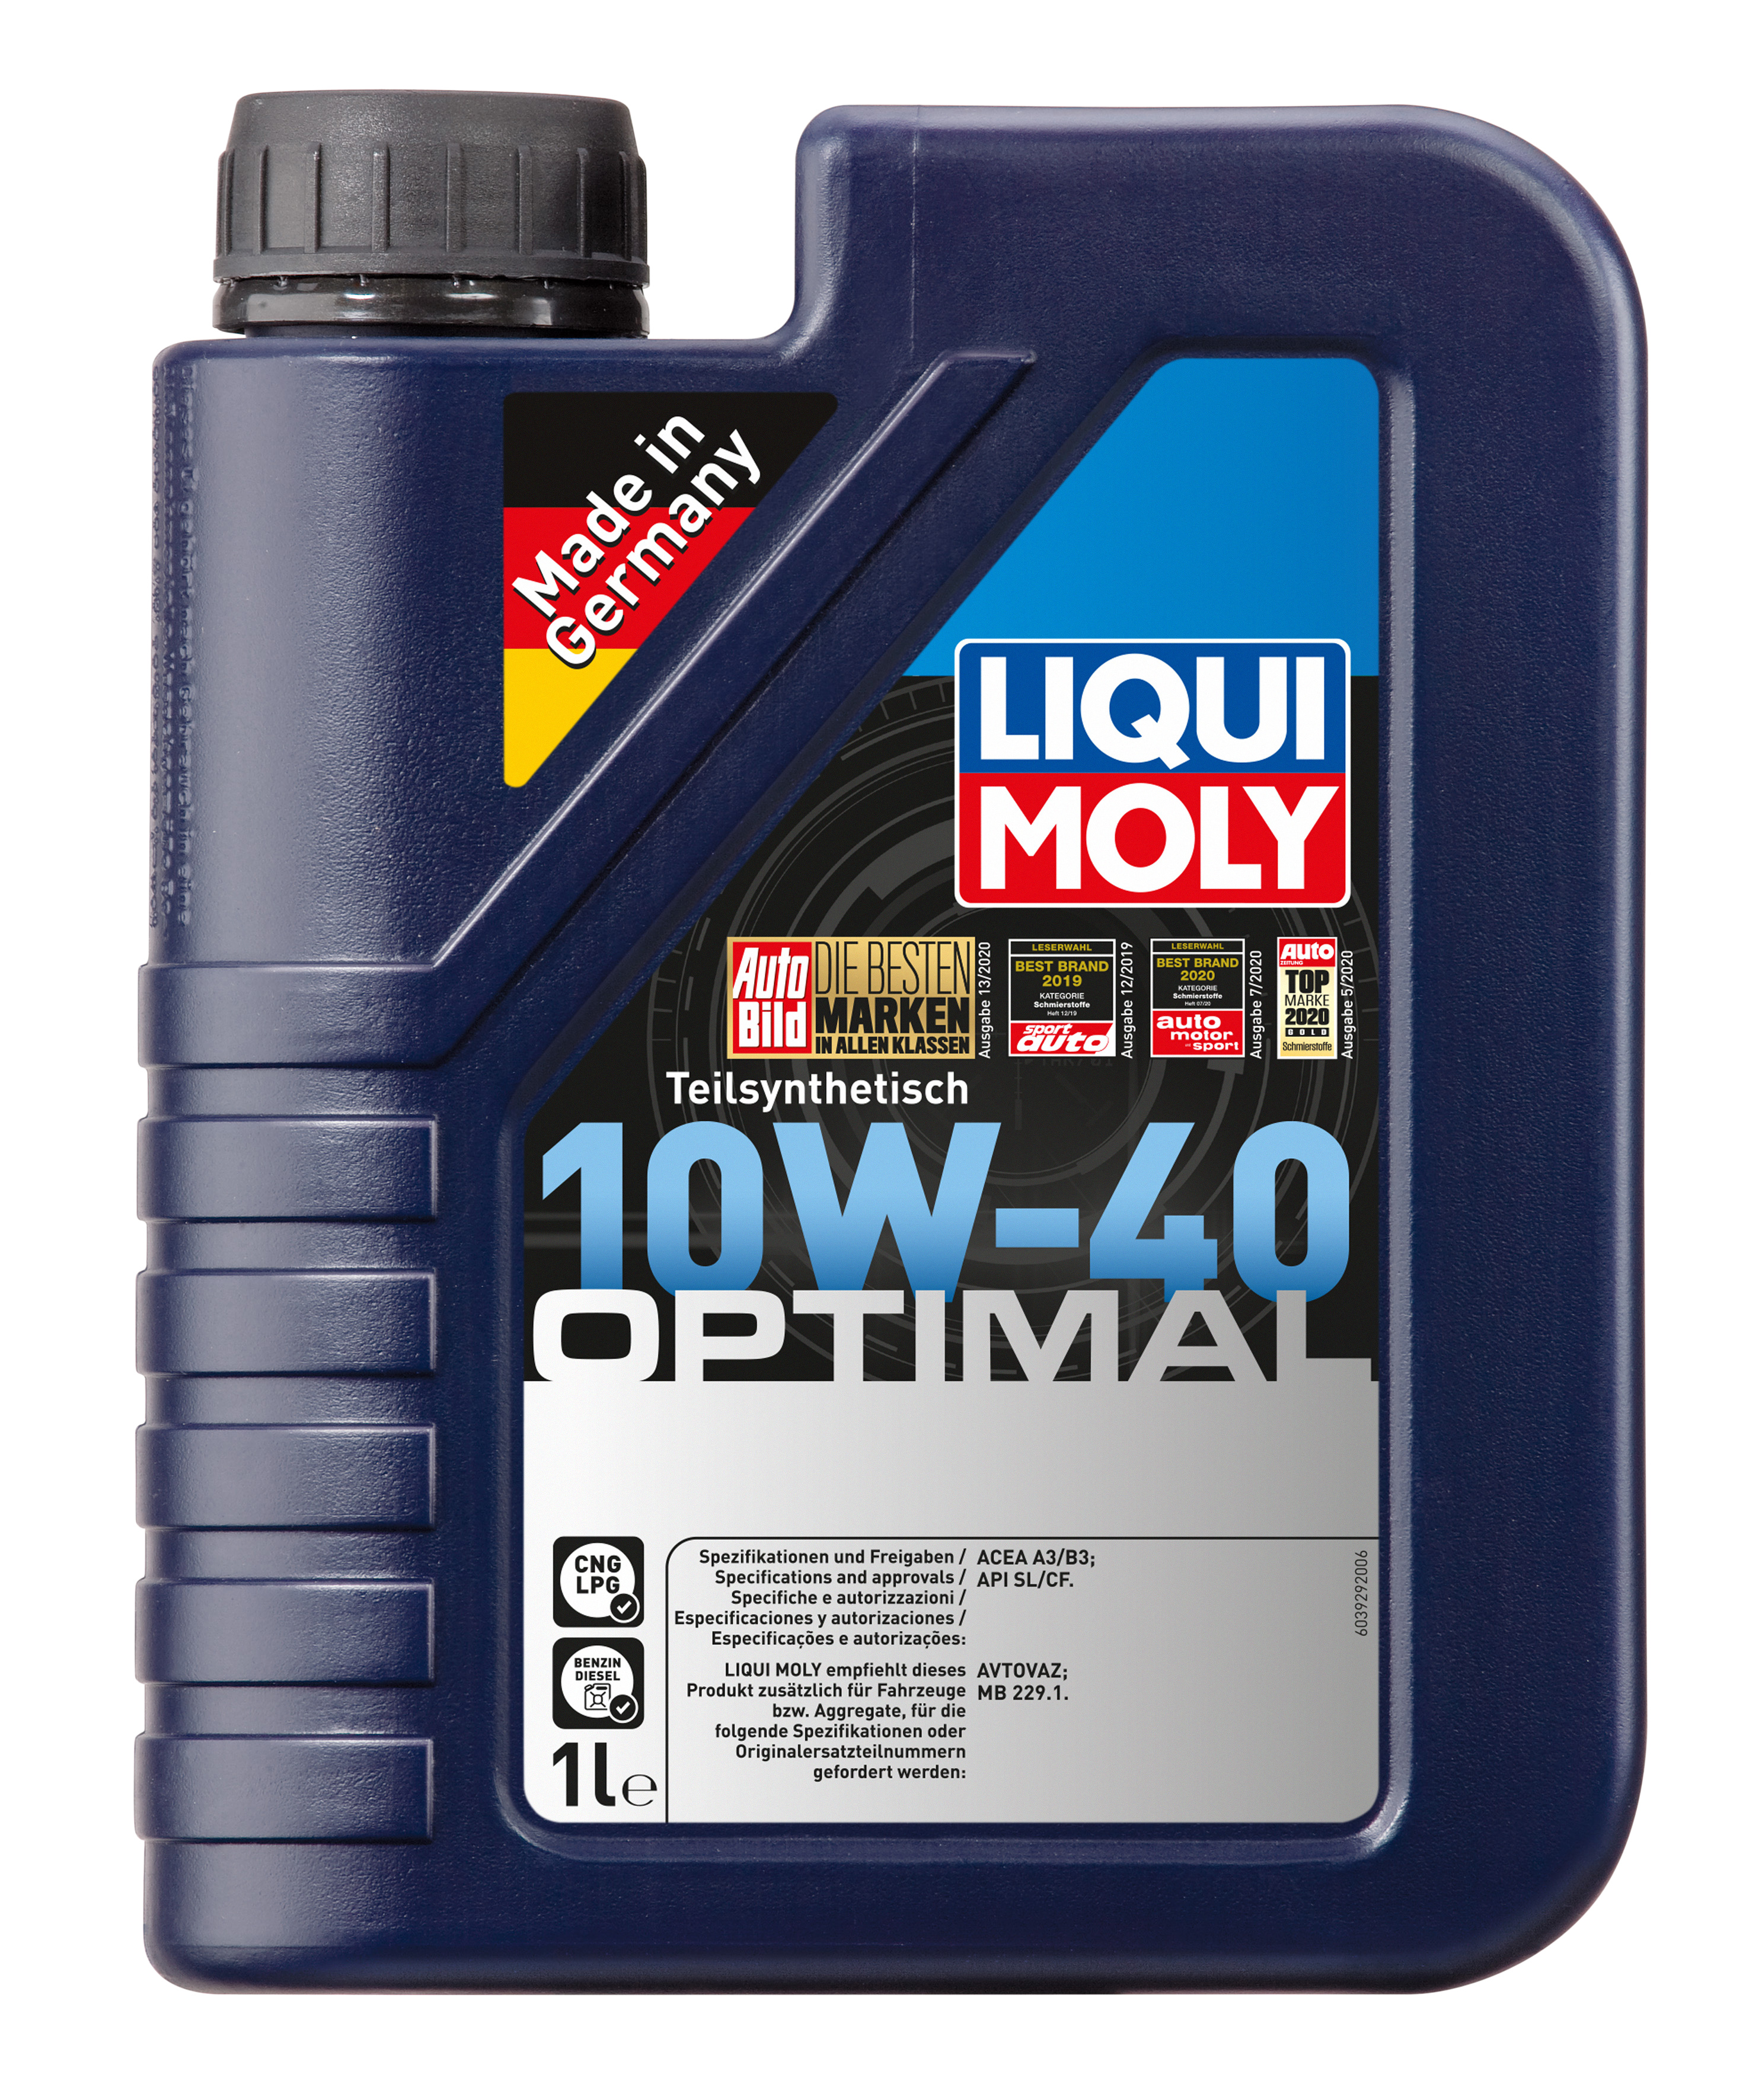 LIQUI MOLY Optimal 10W-40 1L